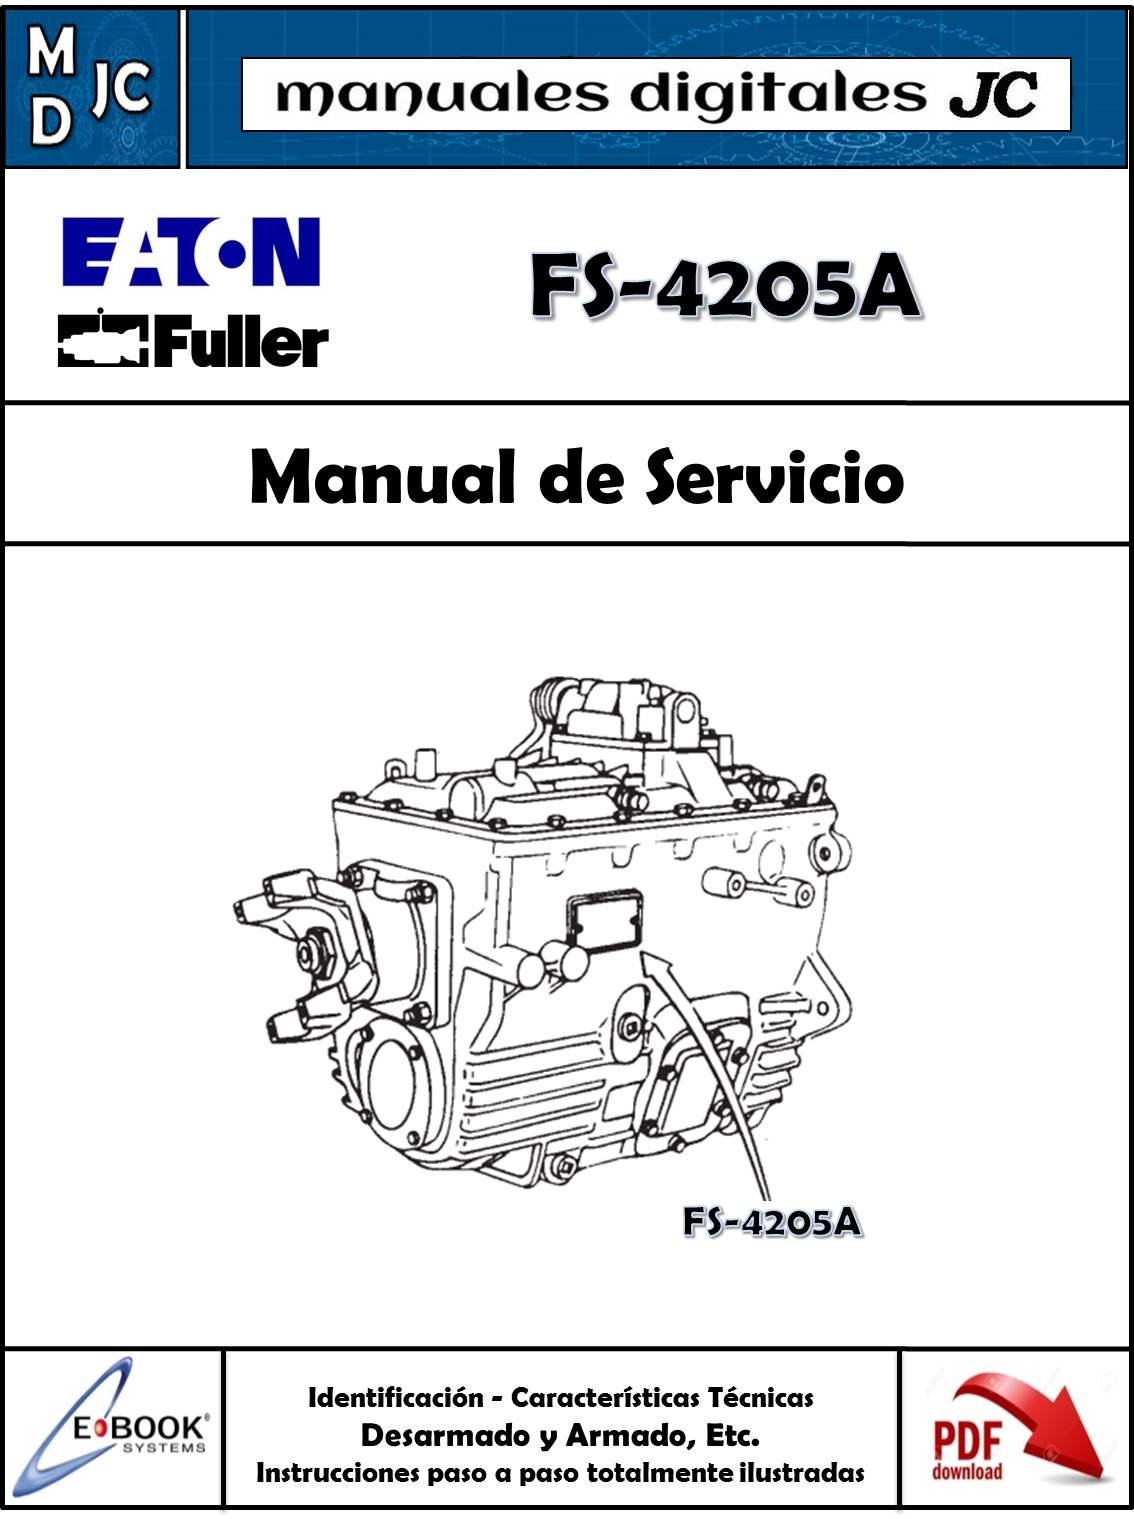 Eaton Fuller FS-4205A